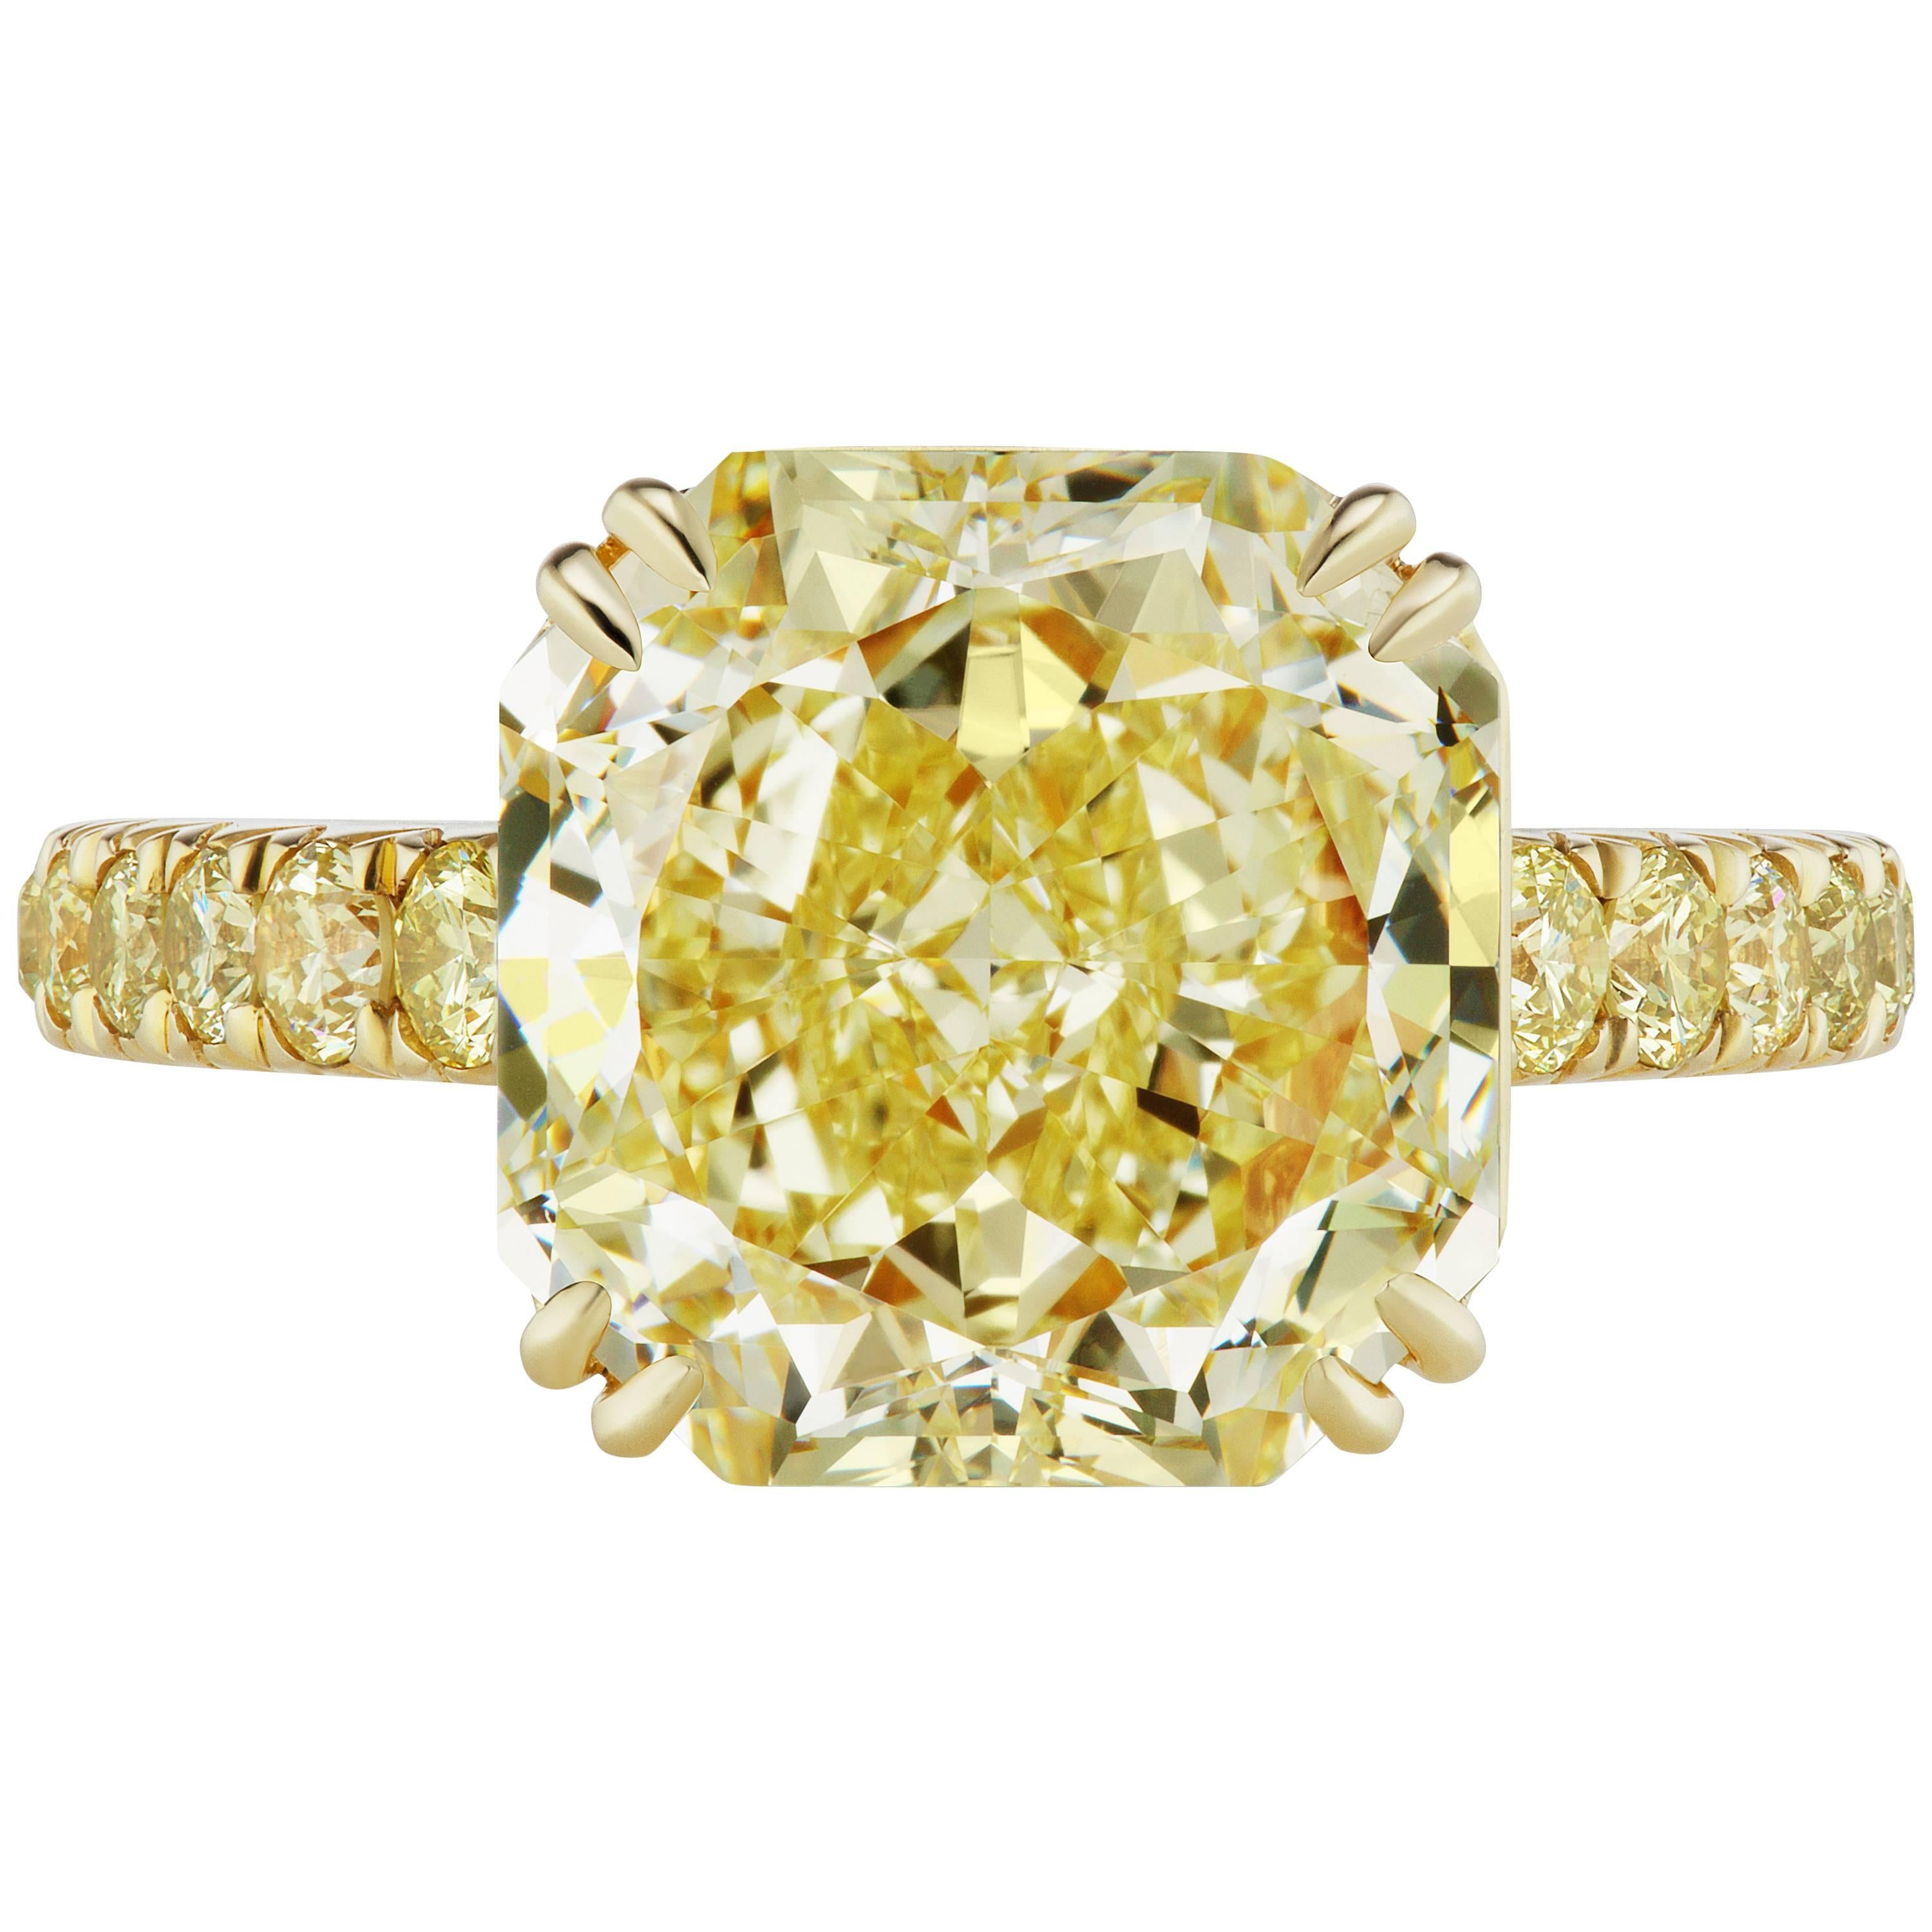 Scarselli 5.69 carat Light Yellow Radiant Cut Diamond Ring GIA Certified